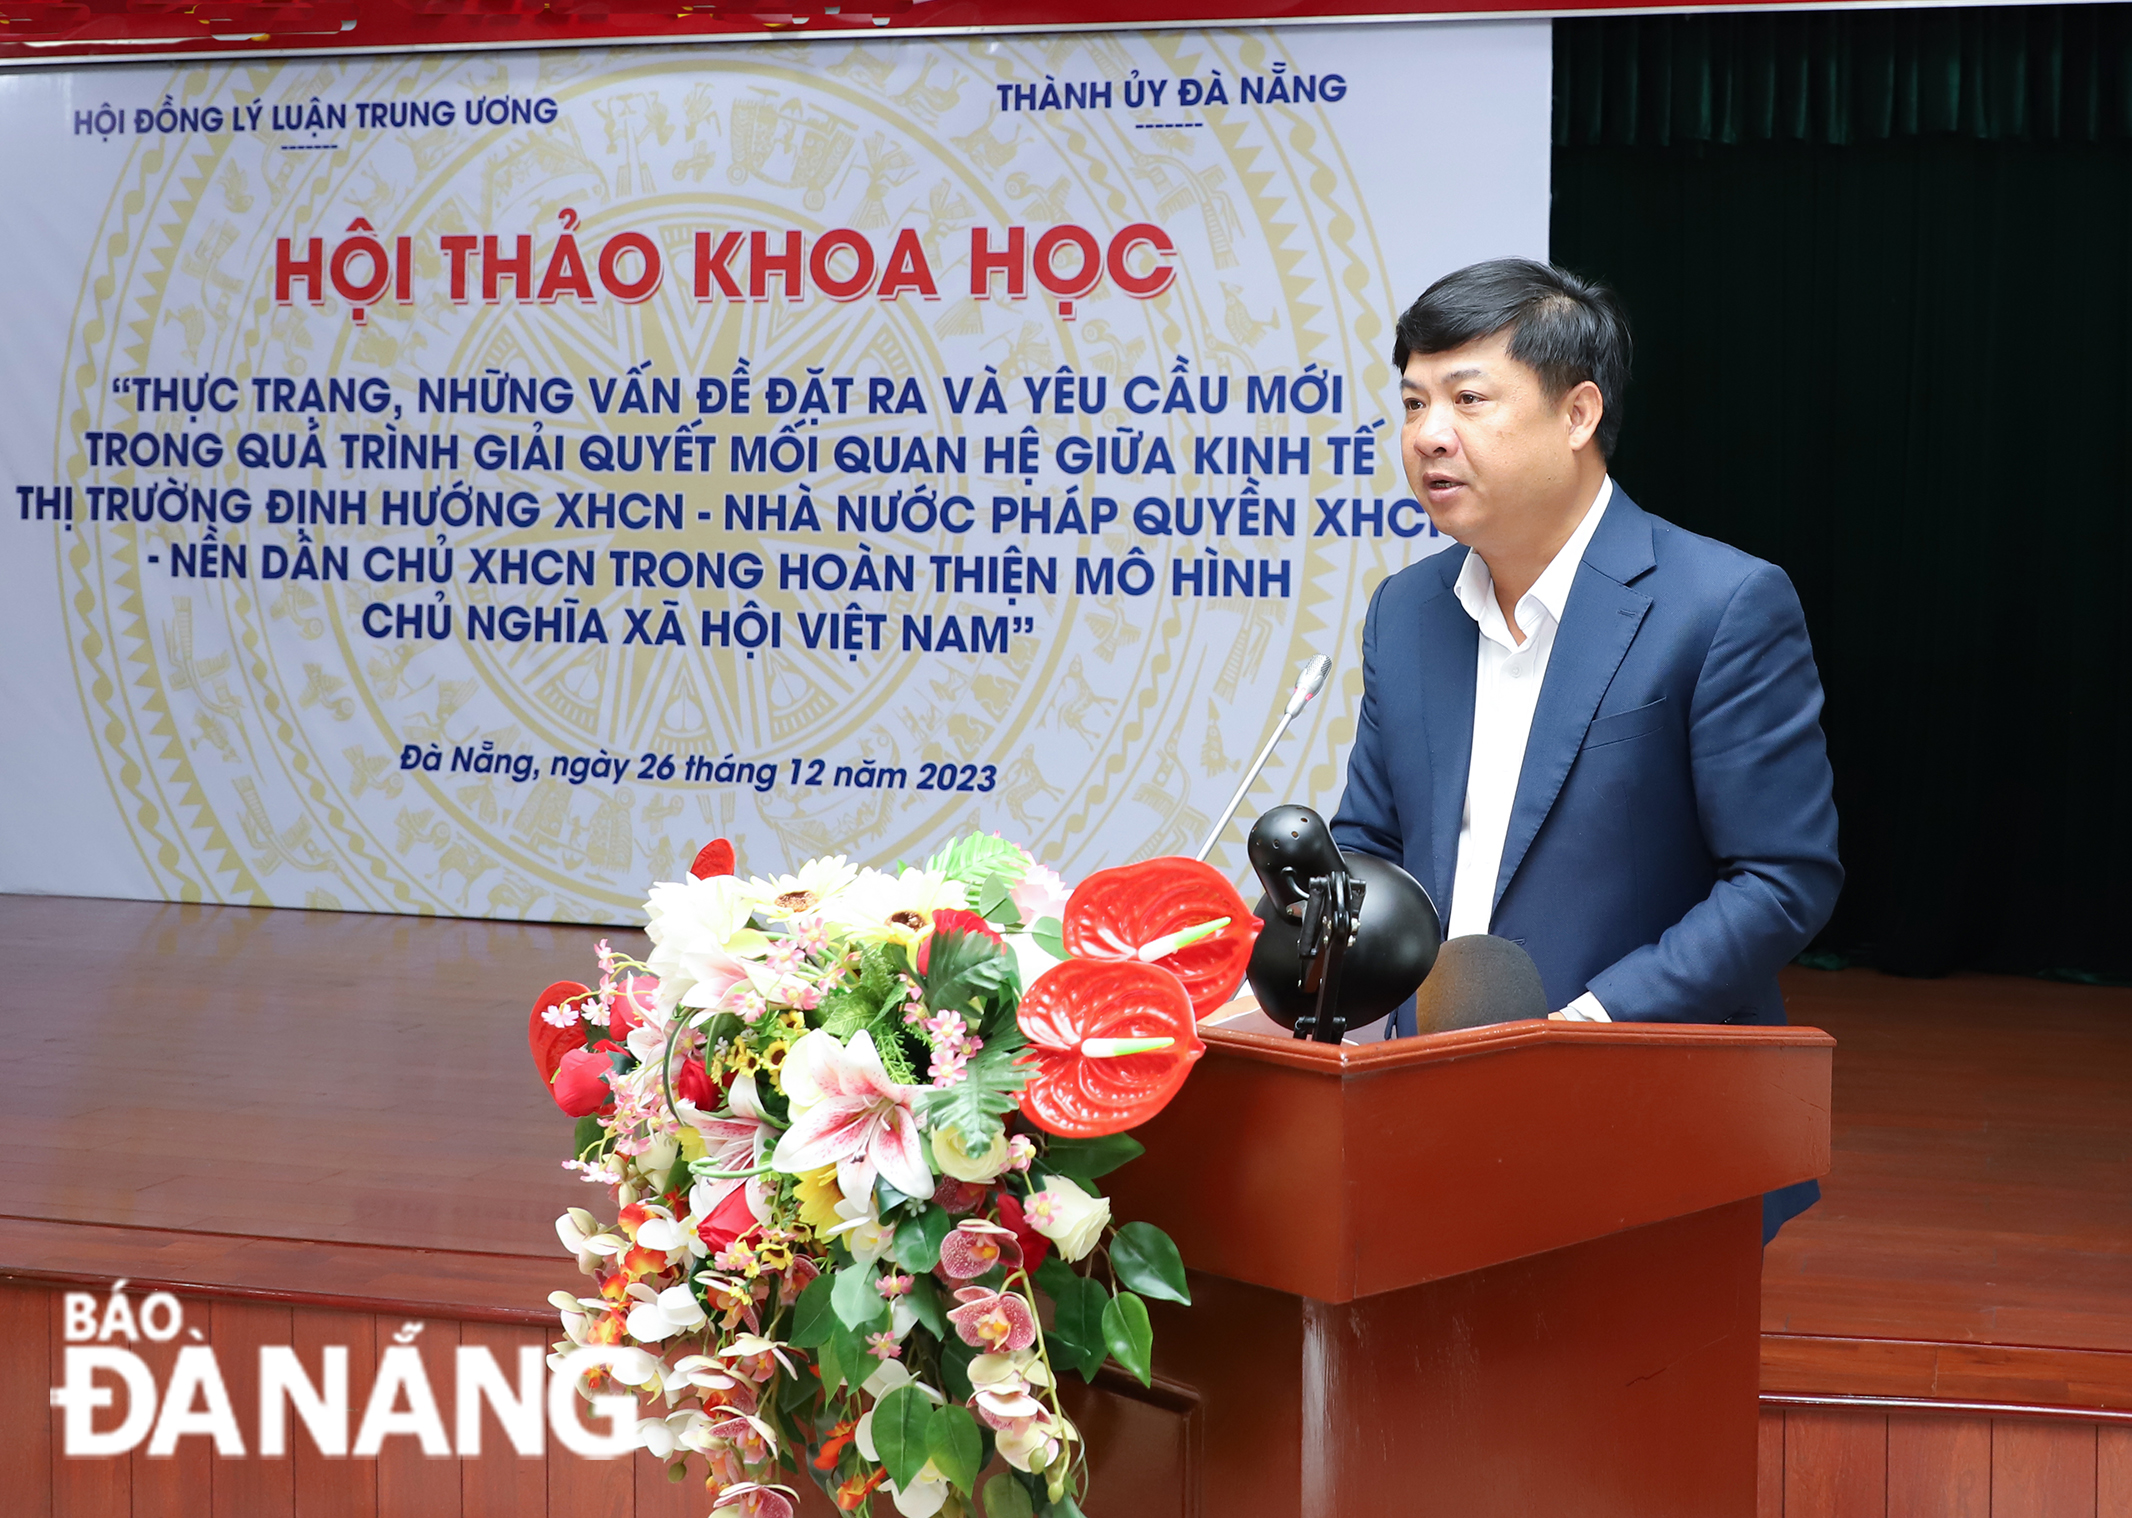 Da Nang Party Committee Deputy Secretary cum People’s Council Chairman Luong Nguyen Minh Triet 